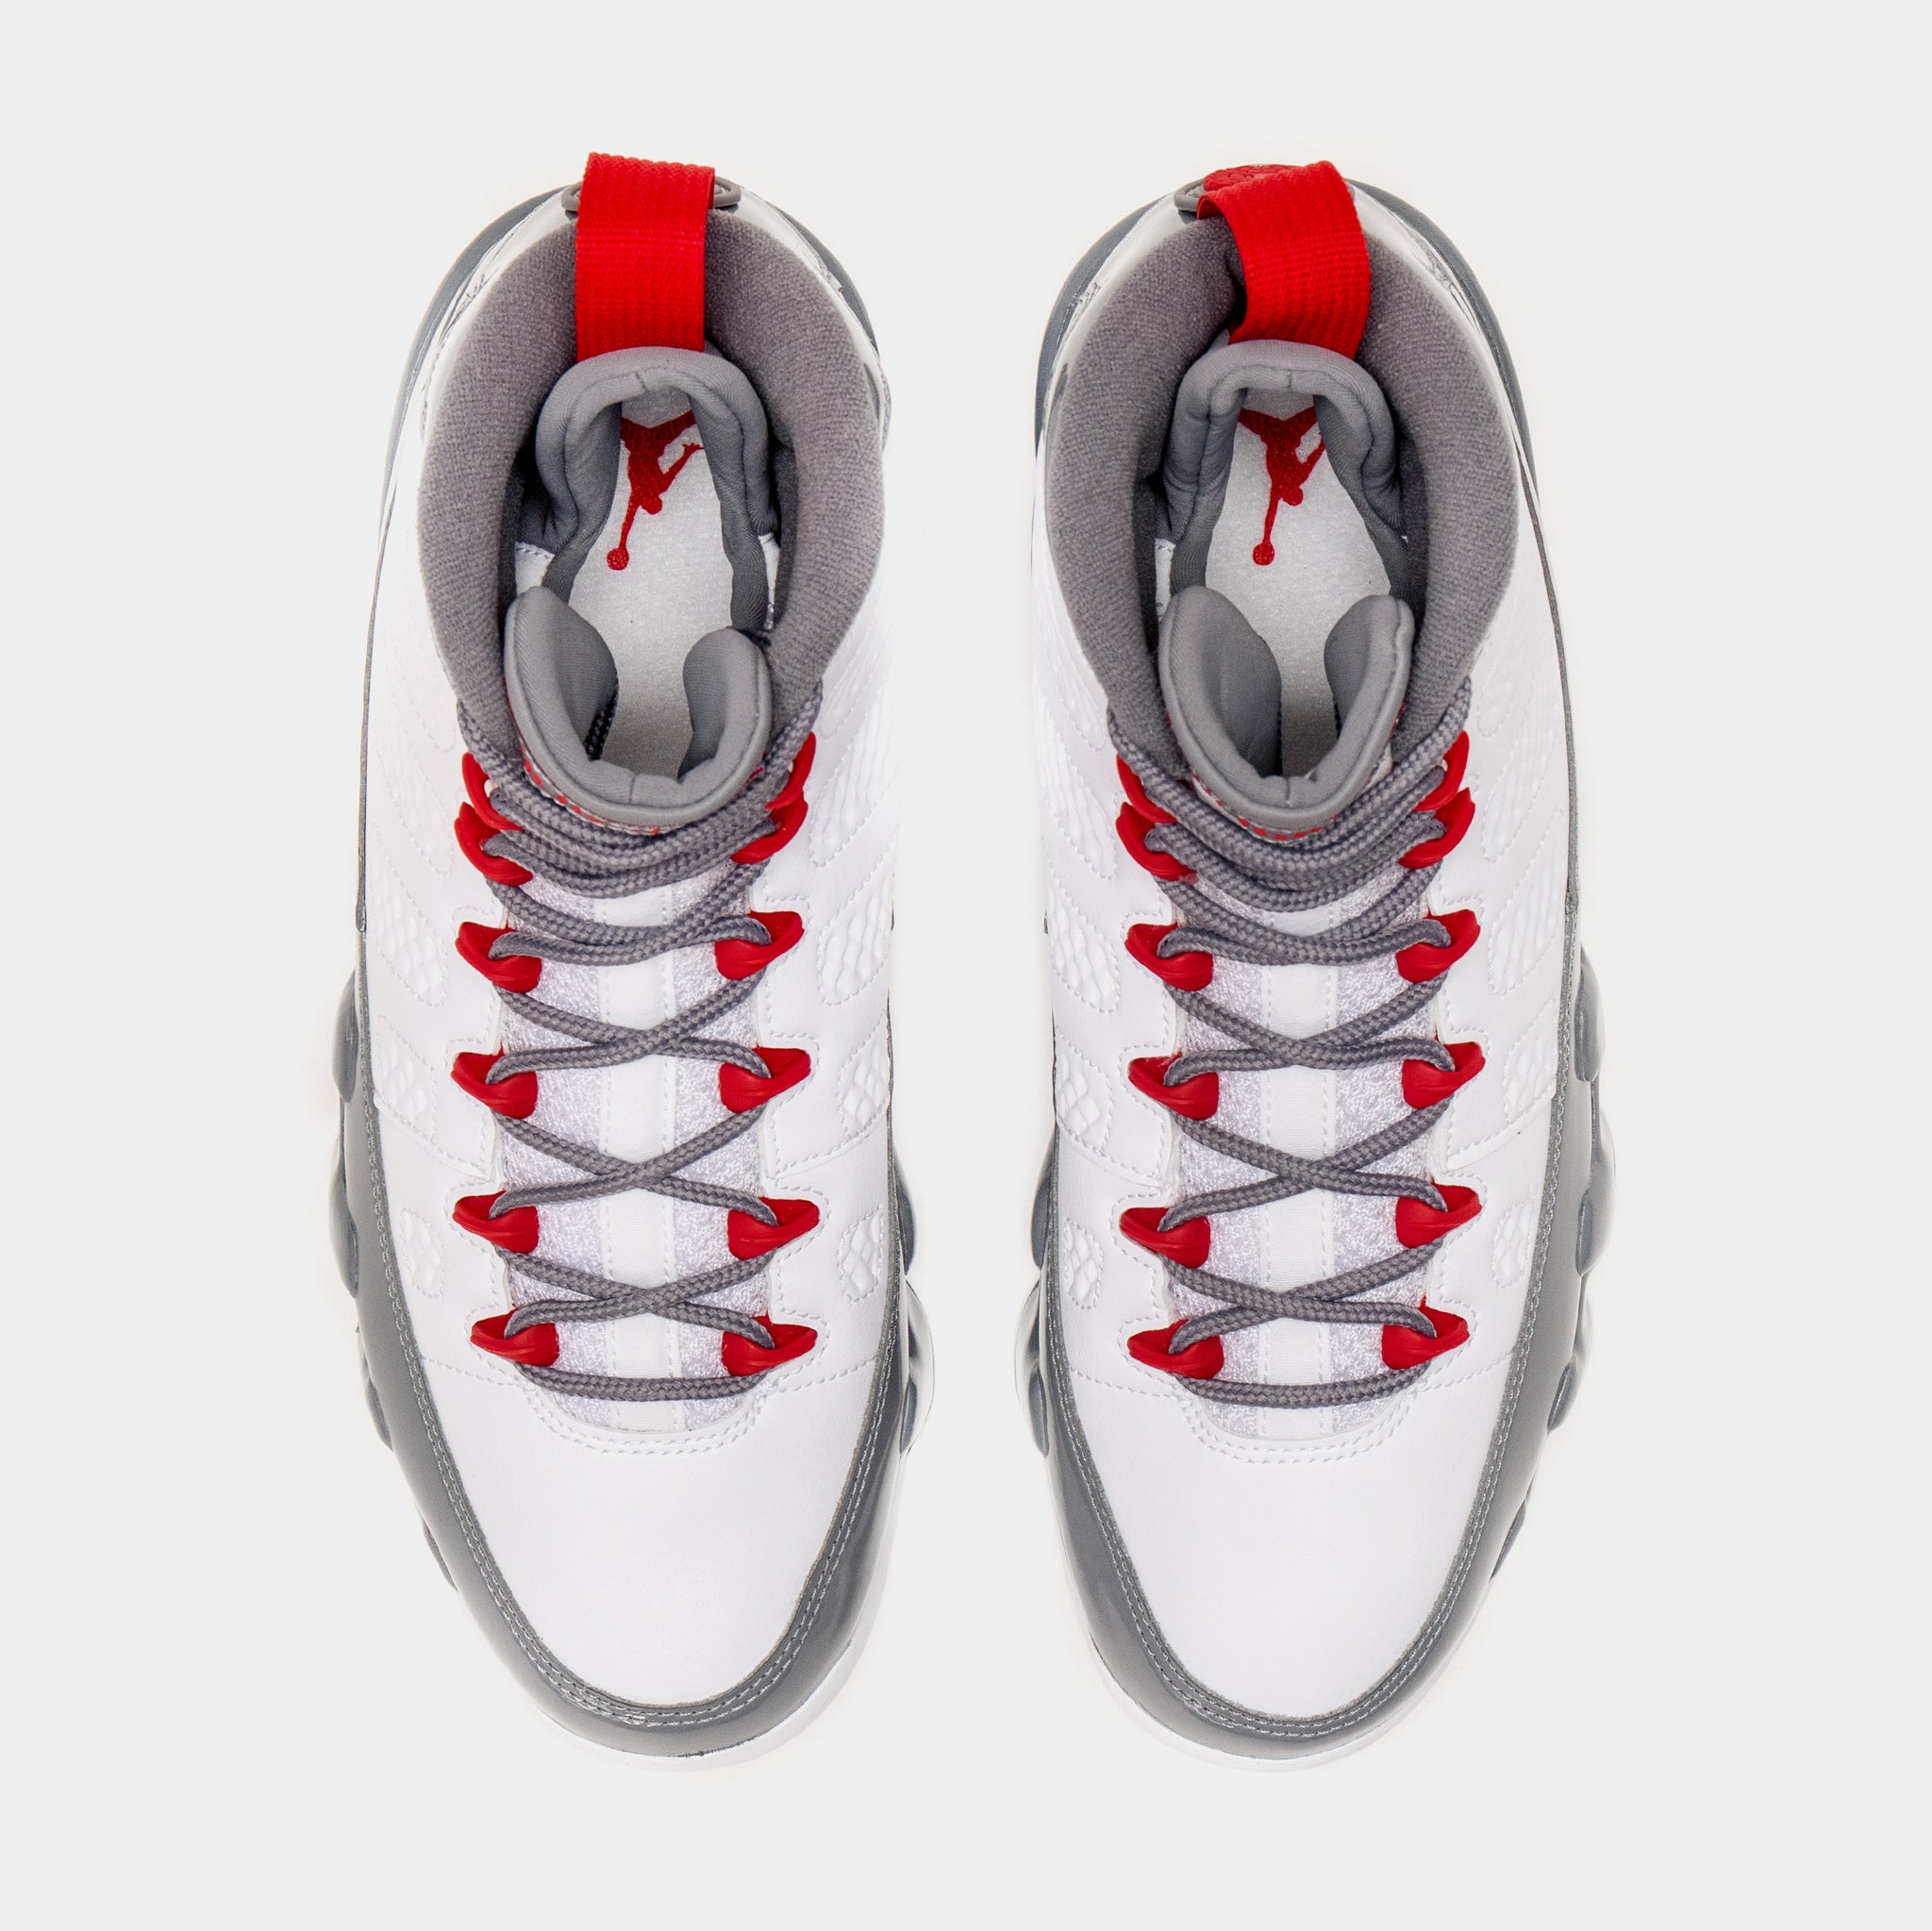 Jordan Air Jordan 9 Retro Fire Red Mens Lifestyle Shoes White Grey